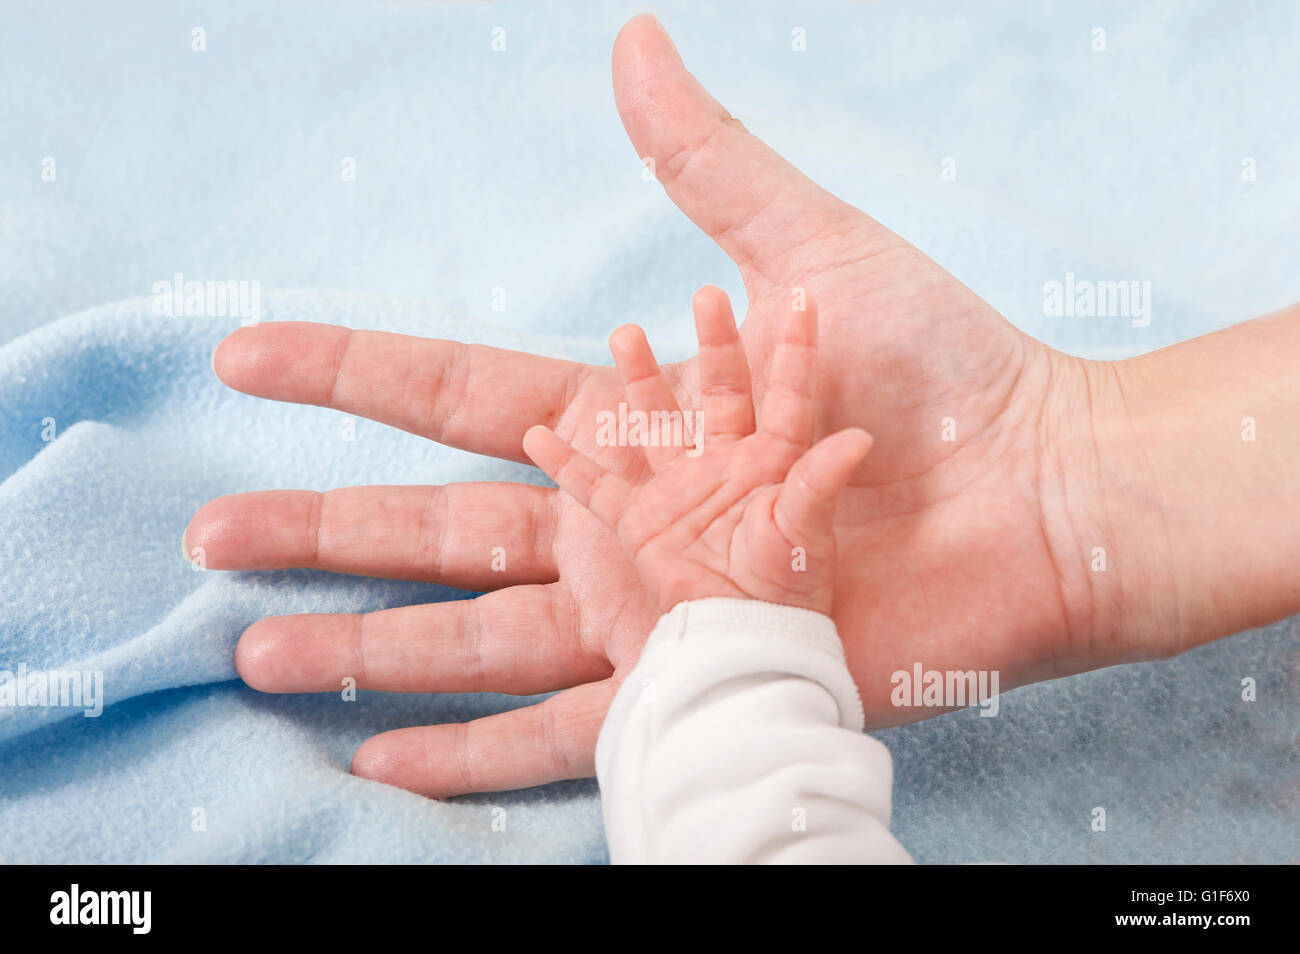 MODEL RELEASED. Parent holding newborn baby's hand. Stock Photo